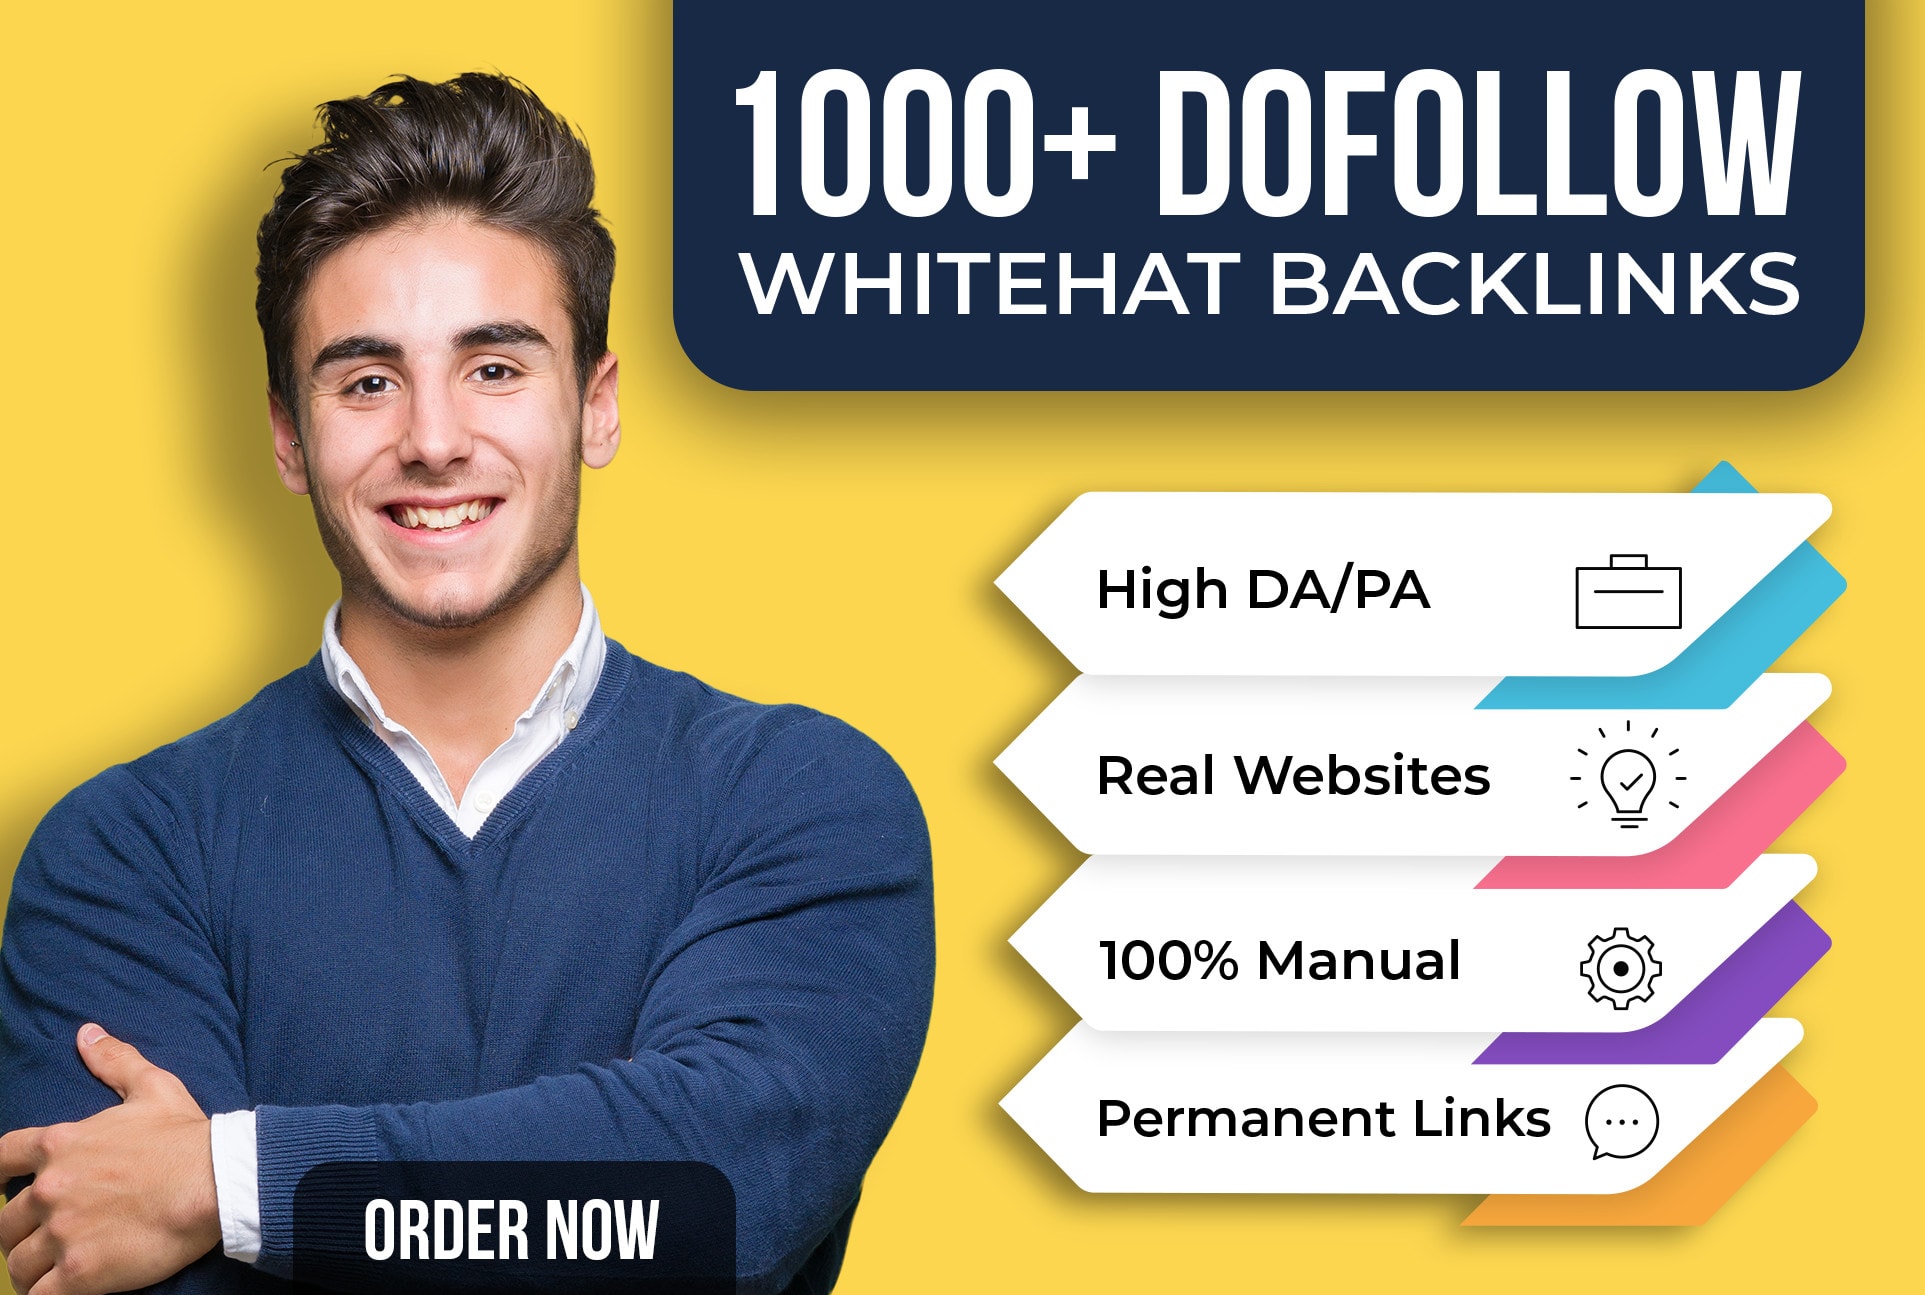 23968create 35 high quality dofollow SEO profile backlinks